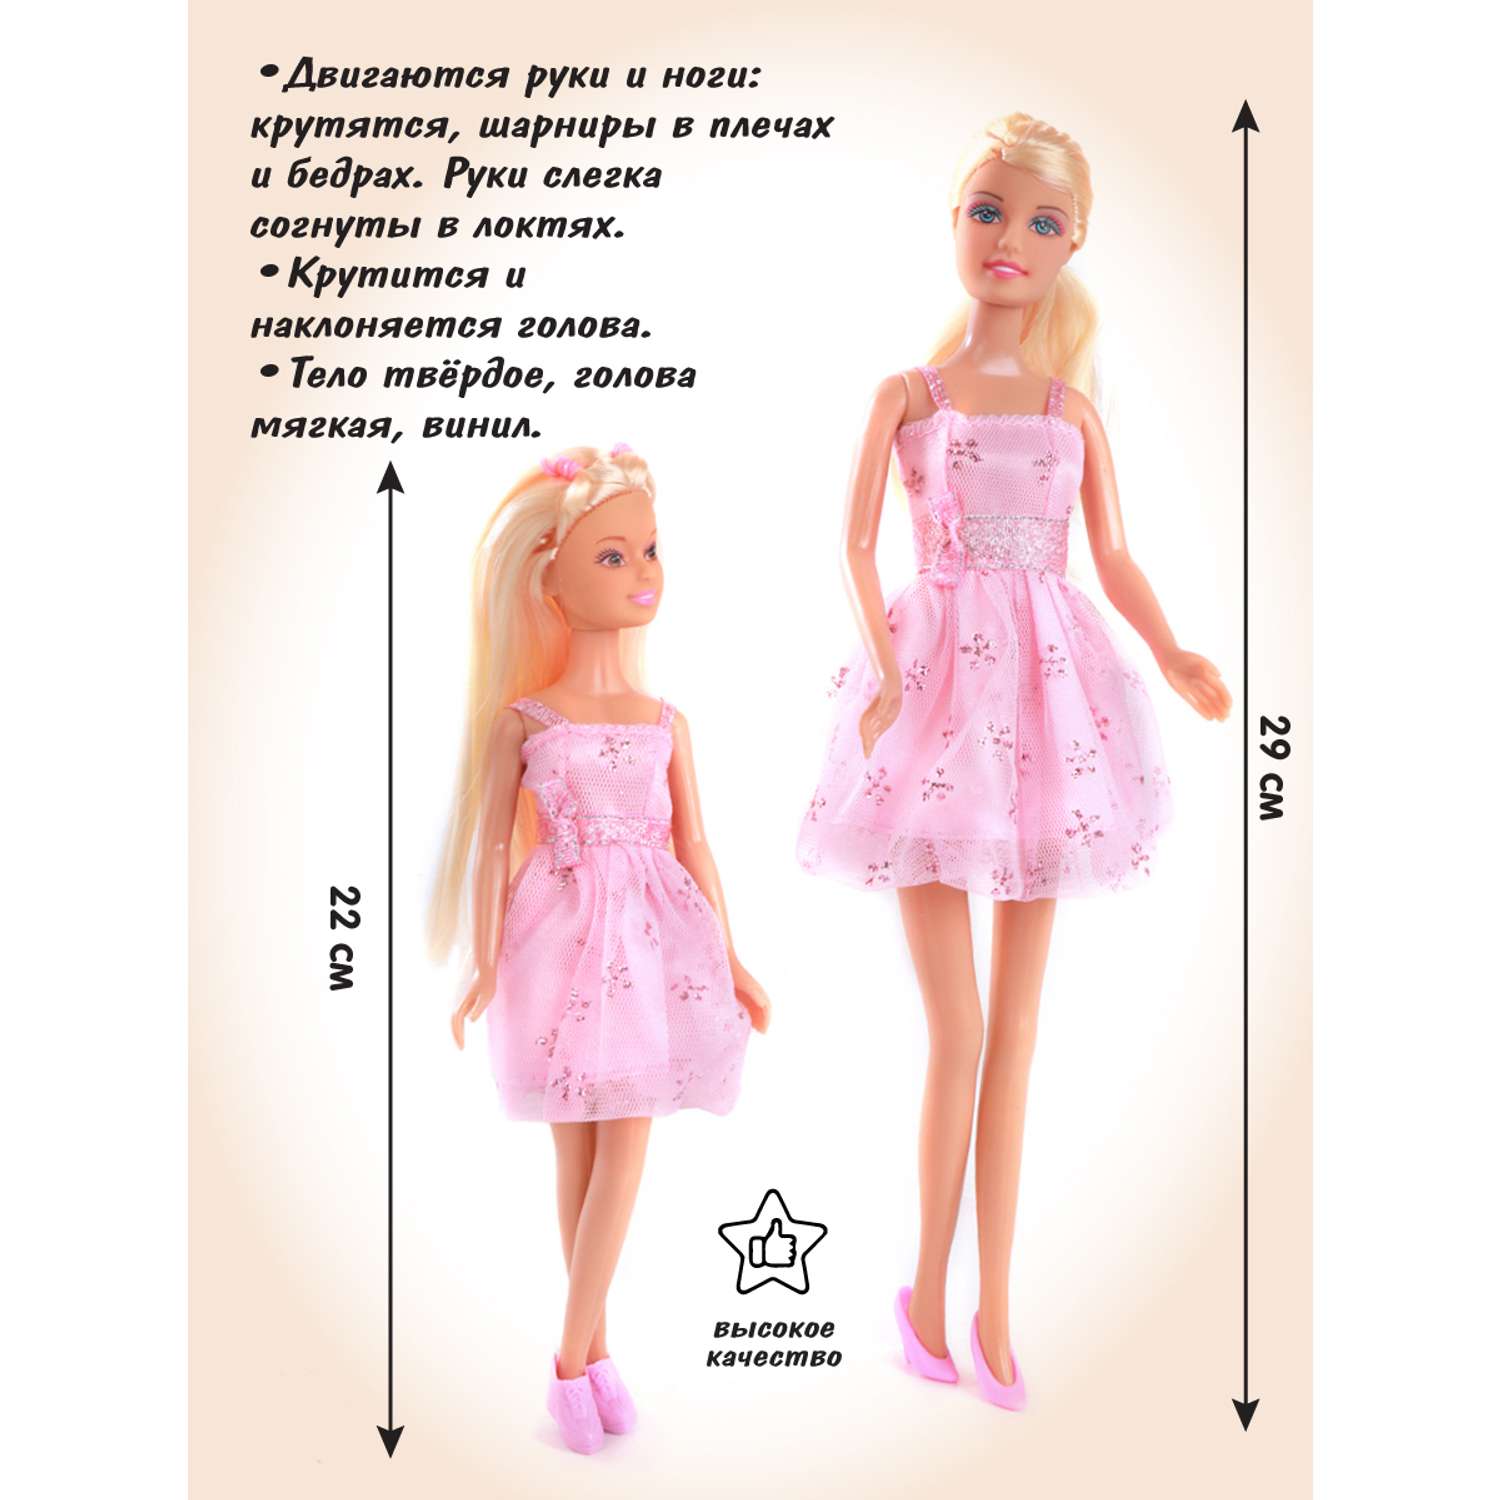 Куклы модель Барби сестры Veld Co на празднике 78470 - фото 3